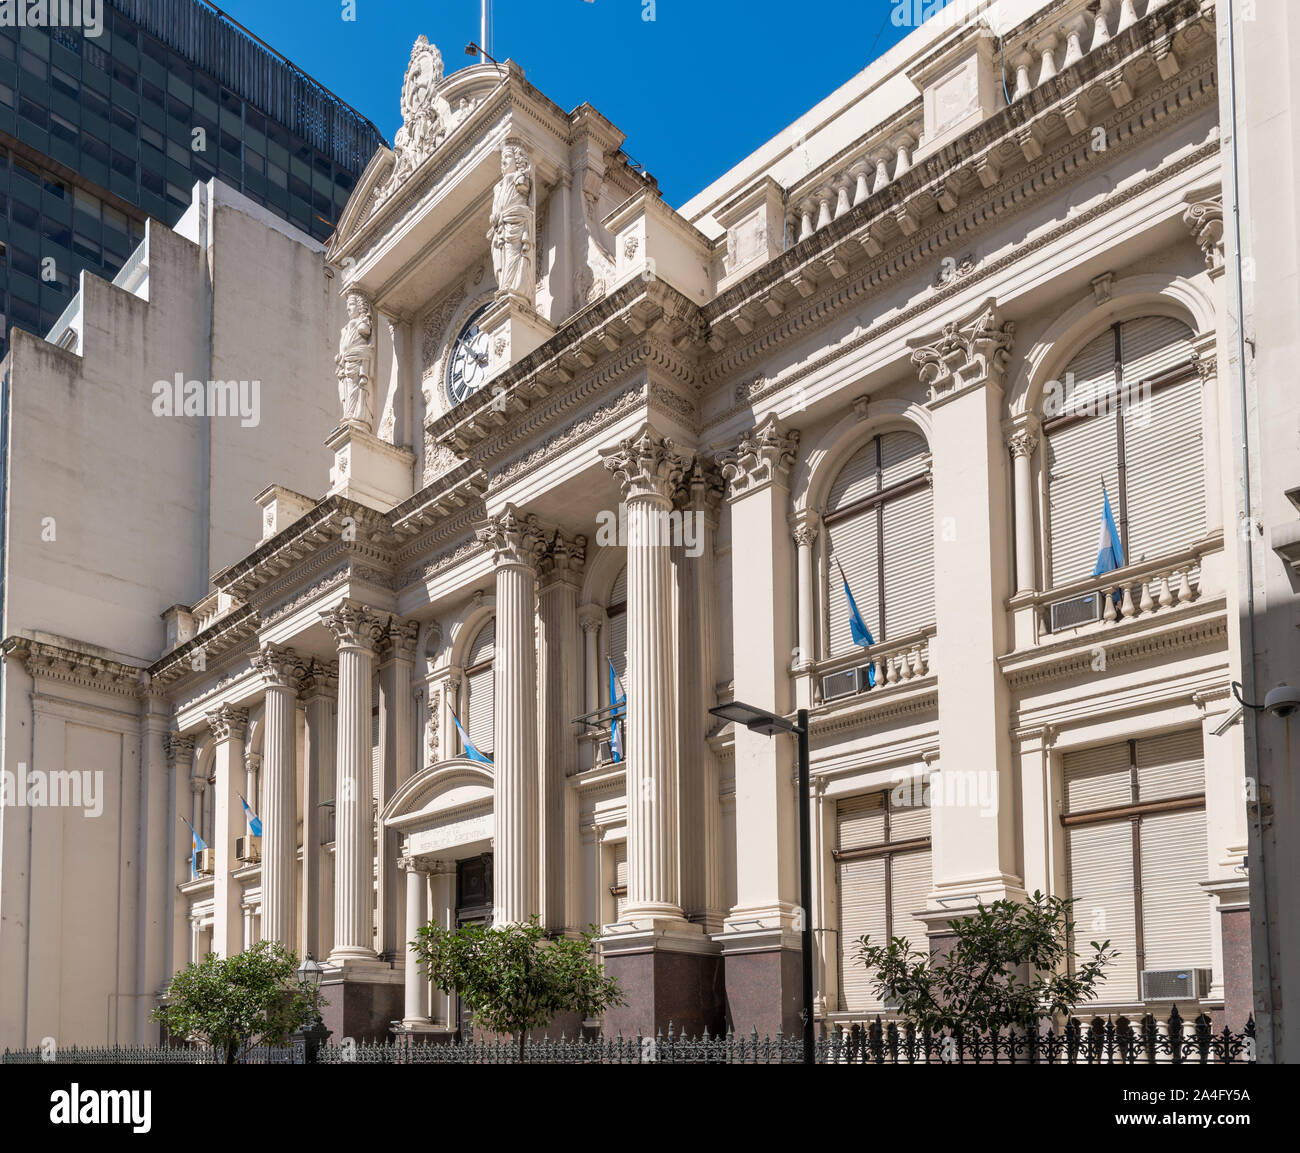 Zentralbank der argentinischen Nation (Banco Central de la República Argentina), Calle Reconquista, Buenos Aires, Argentinien Stockfoto